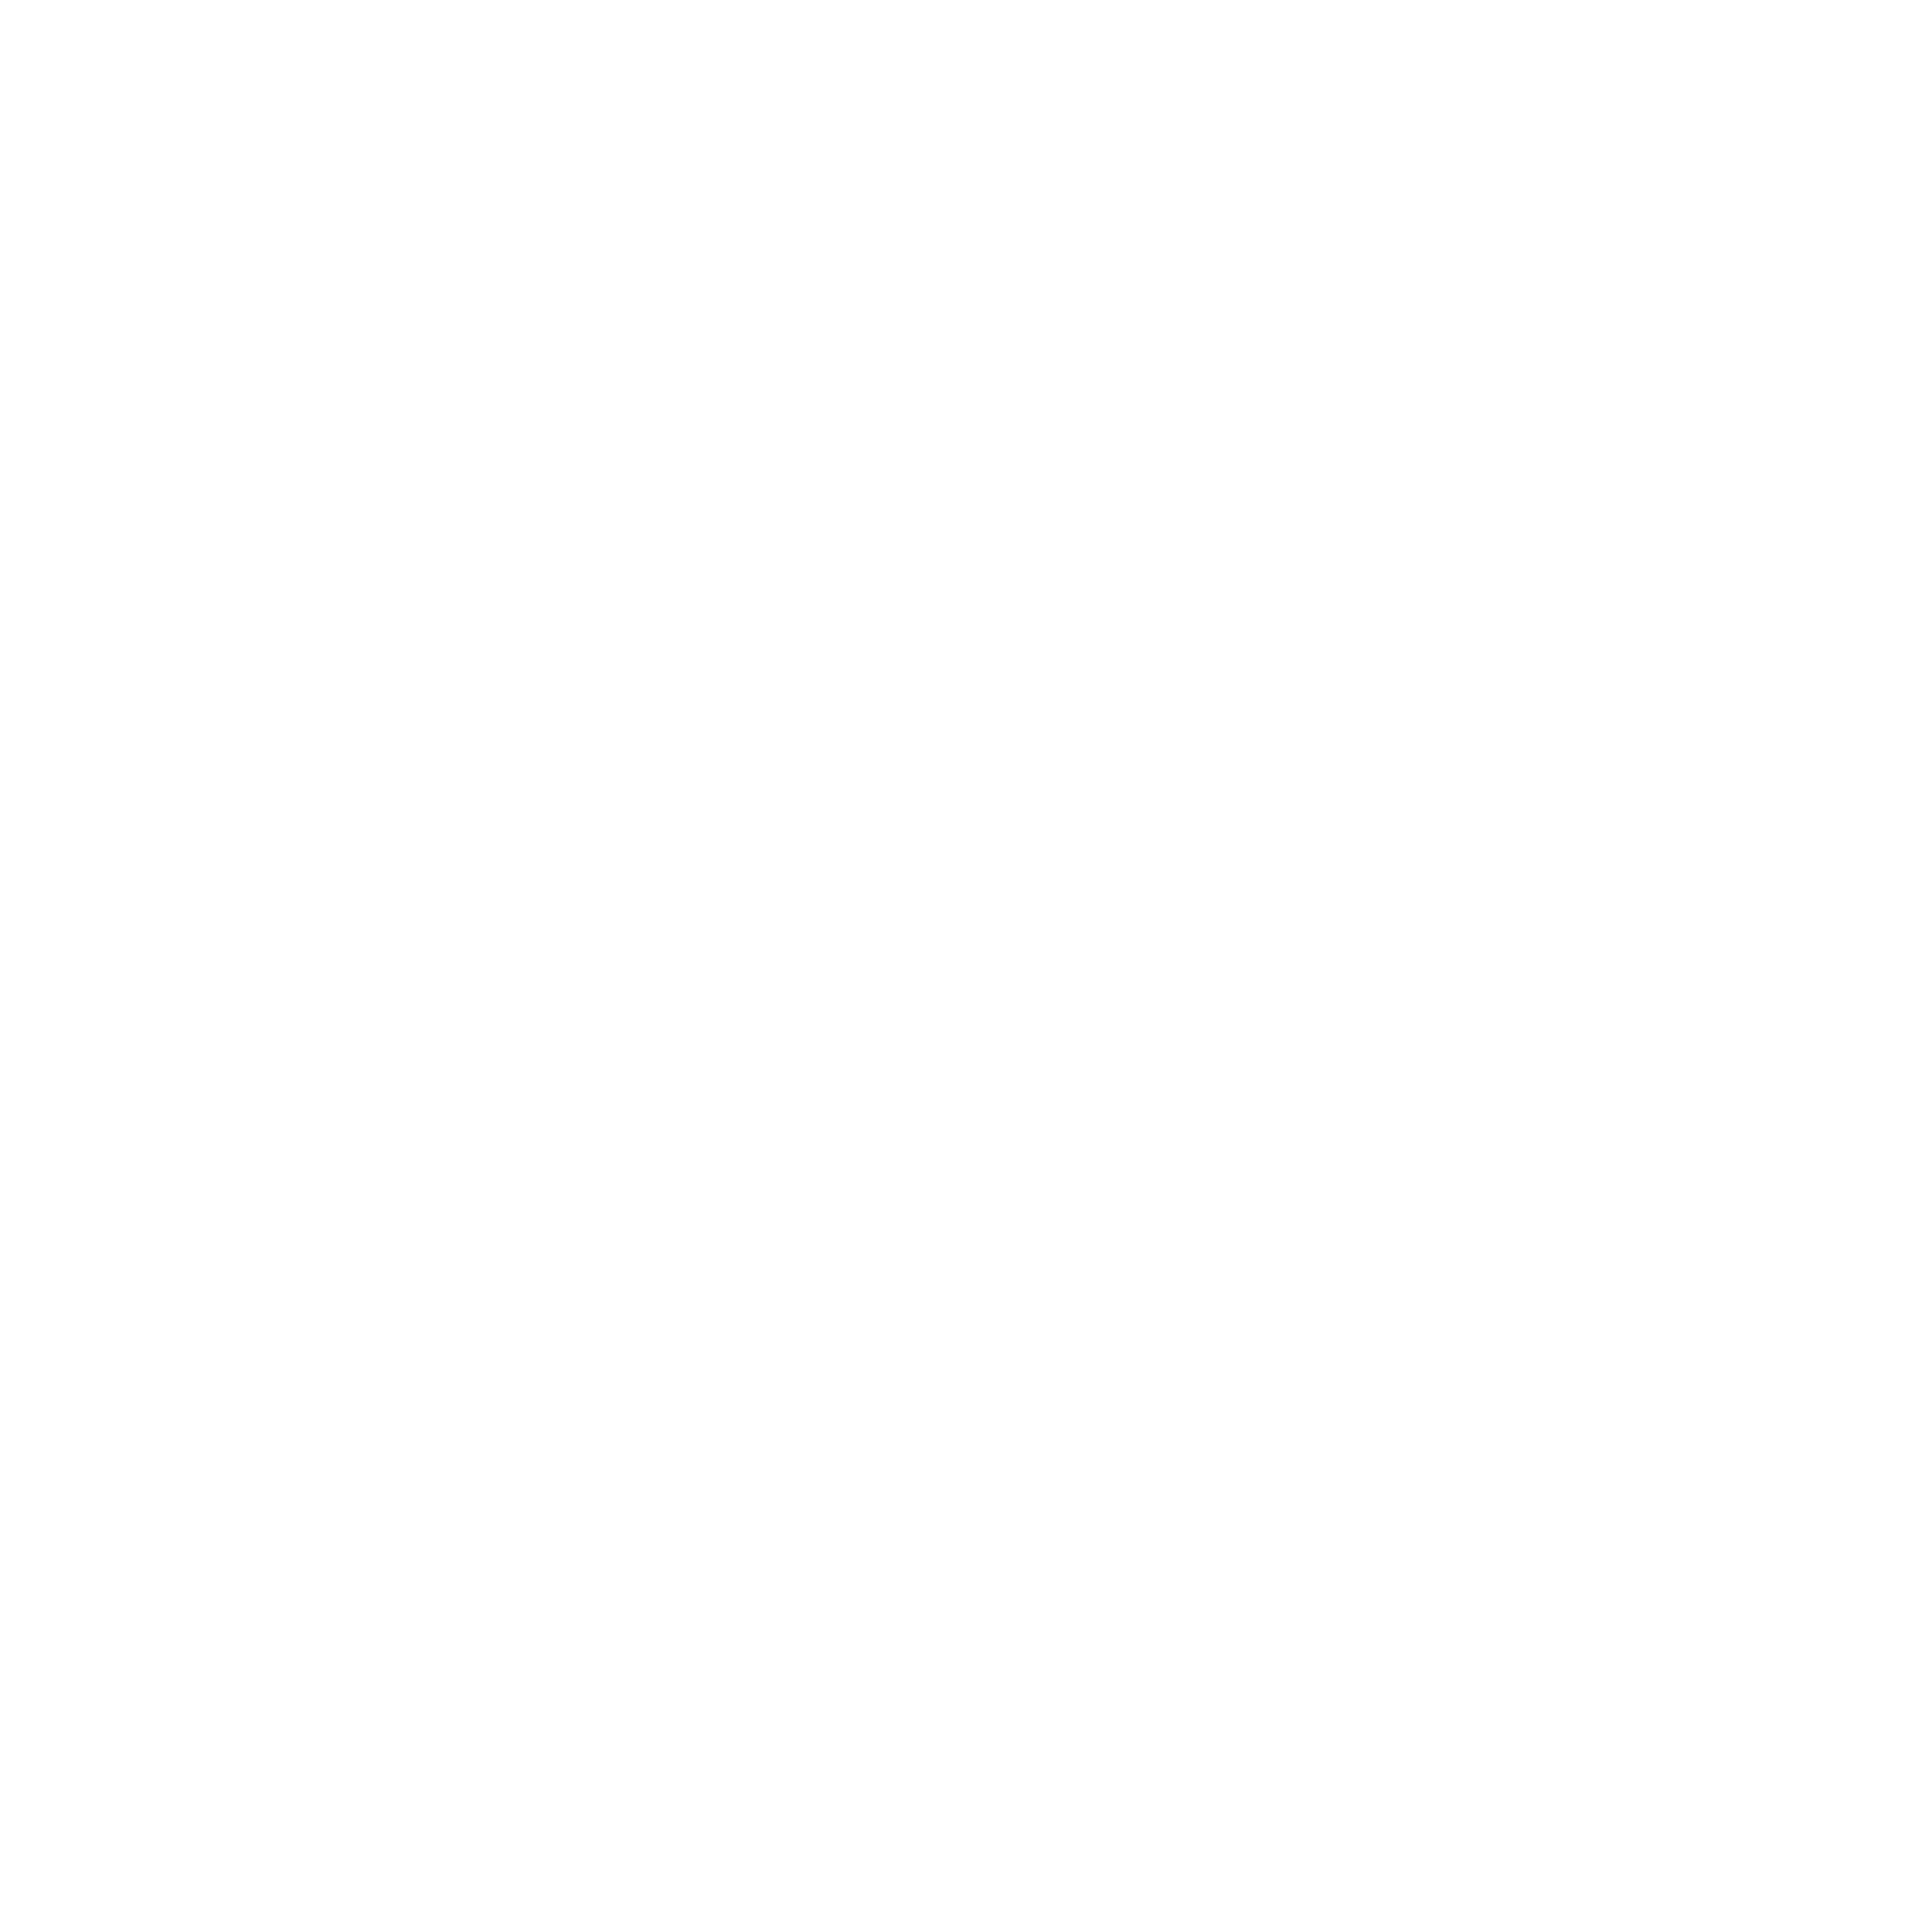 Coach USA Logo - Coach USA Logo PNG Transparent & SVG Vector